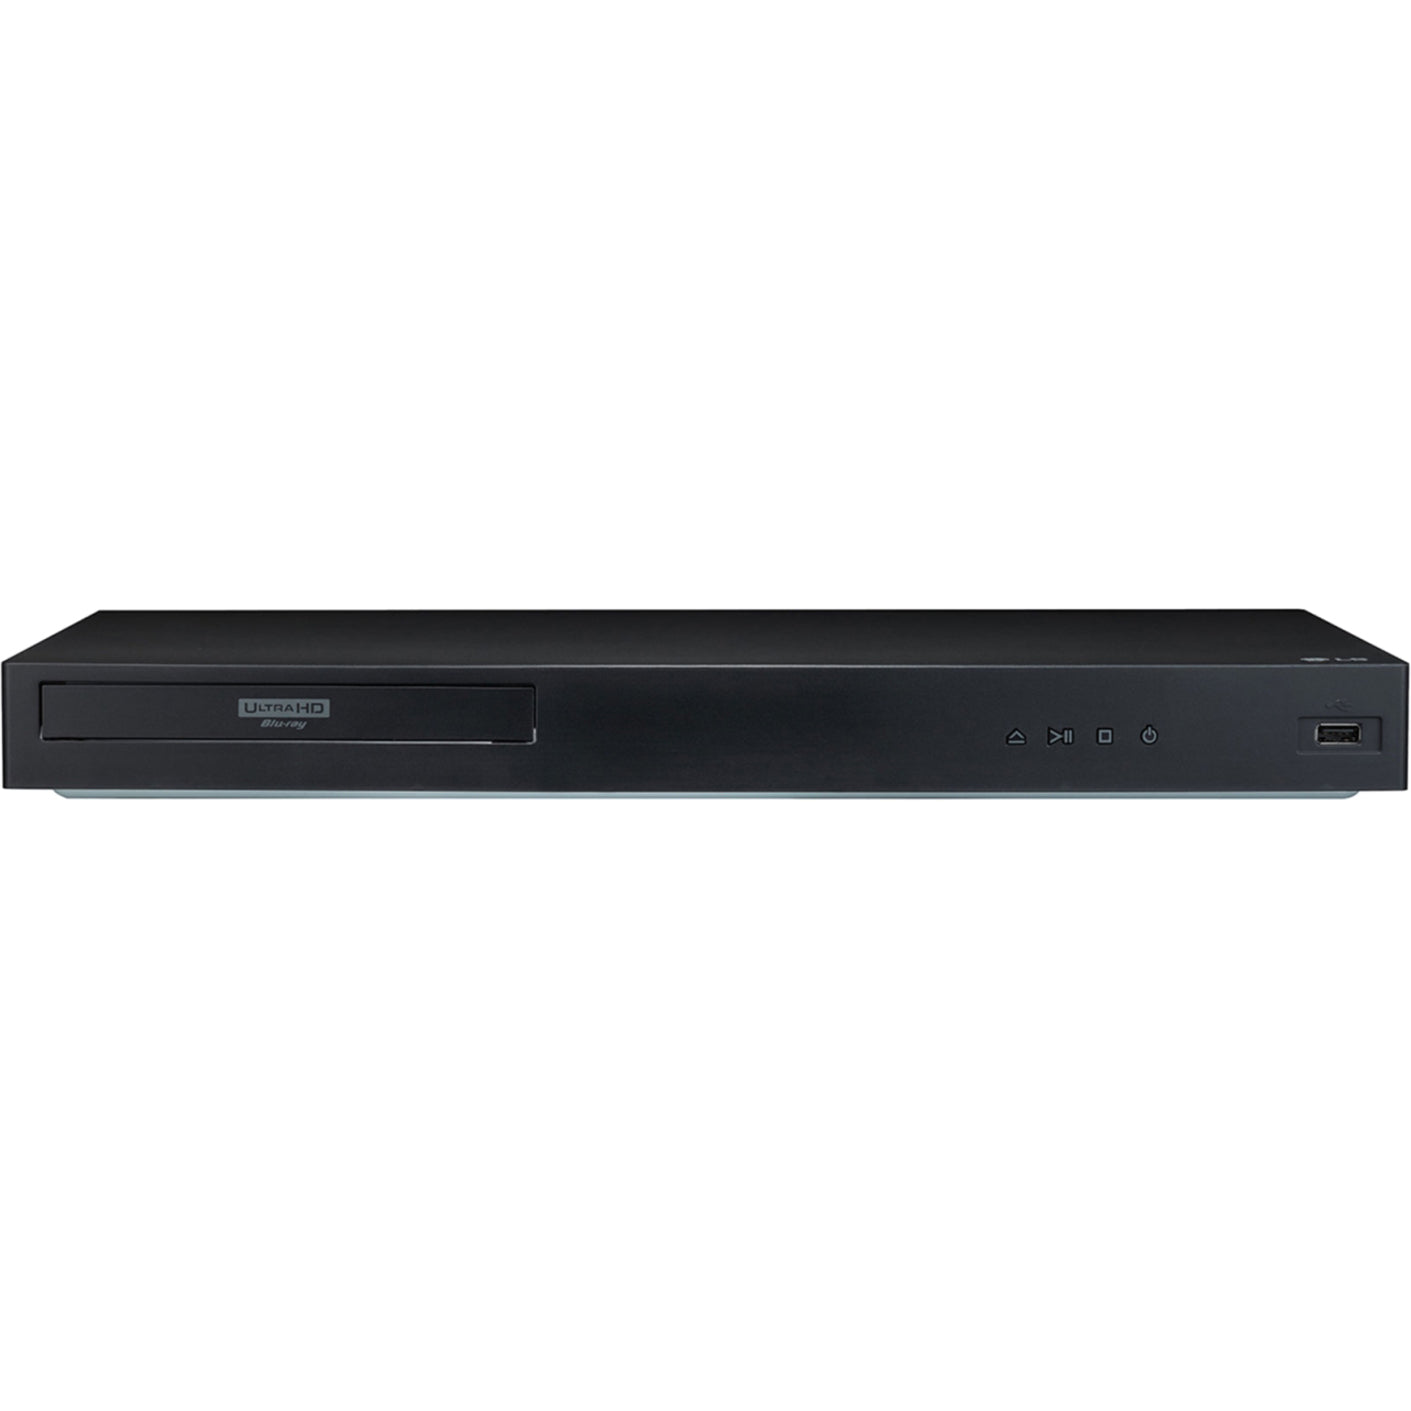 LG UBK80 4K Ultra HD HDR Blu-ray Player, 1 Disc, Dolby Atmos, DTS-HD Master Audio, 2160p